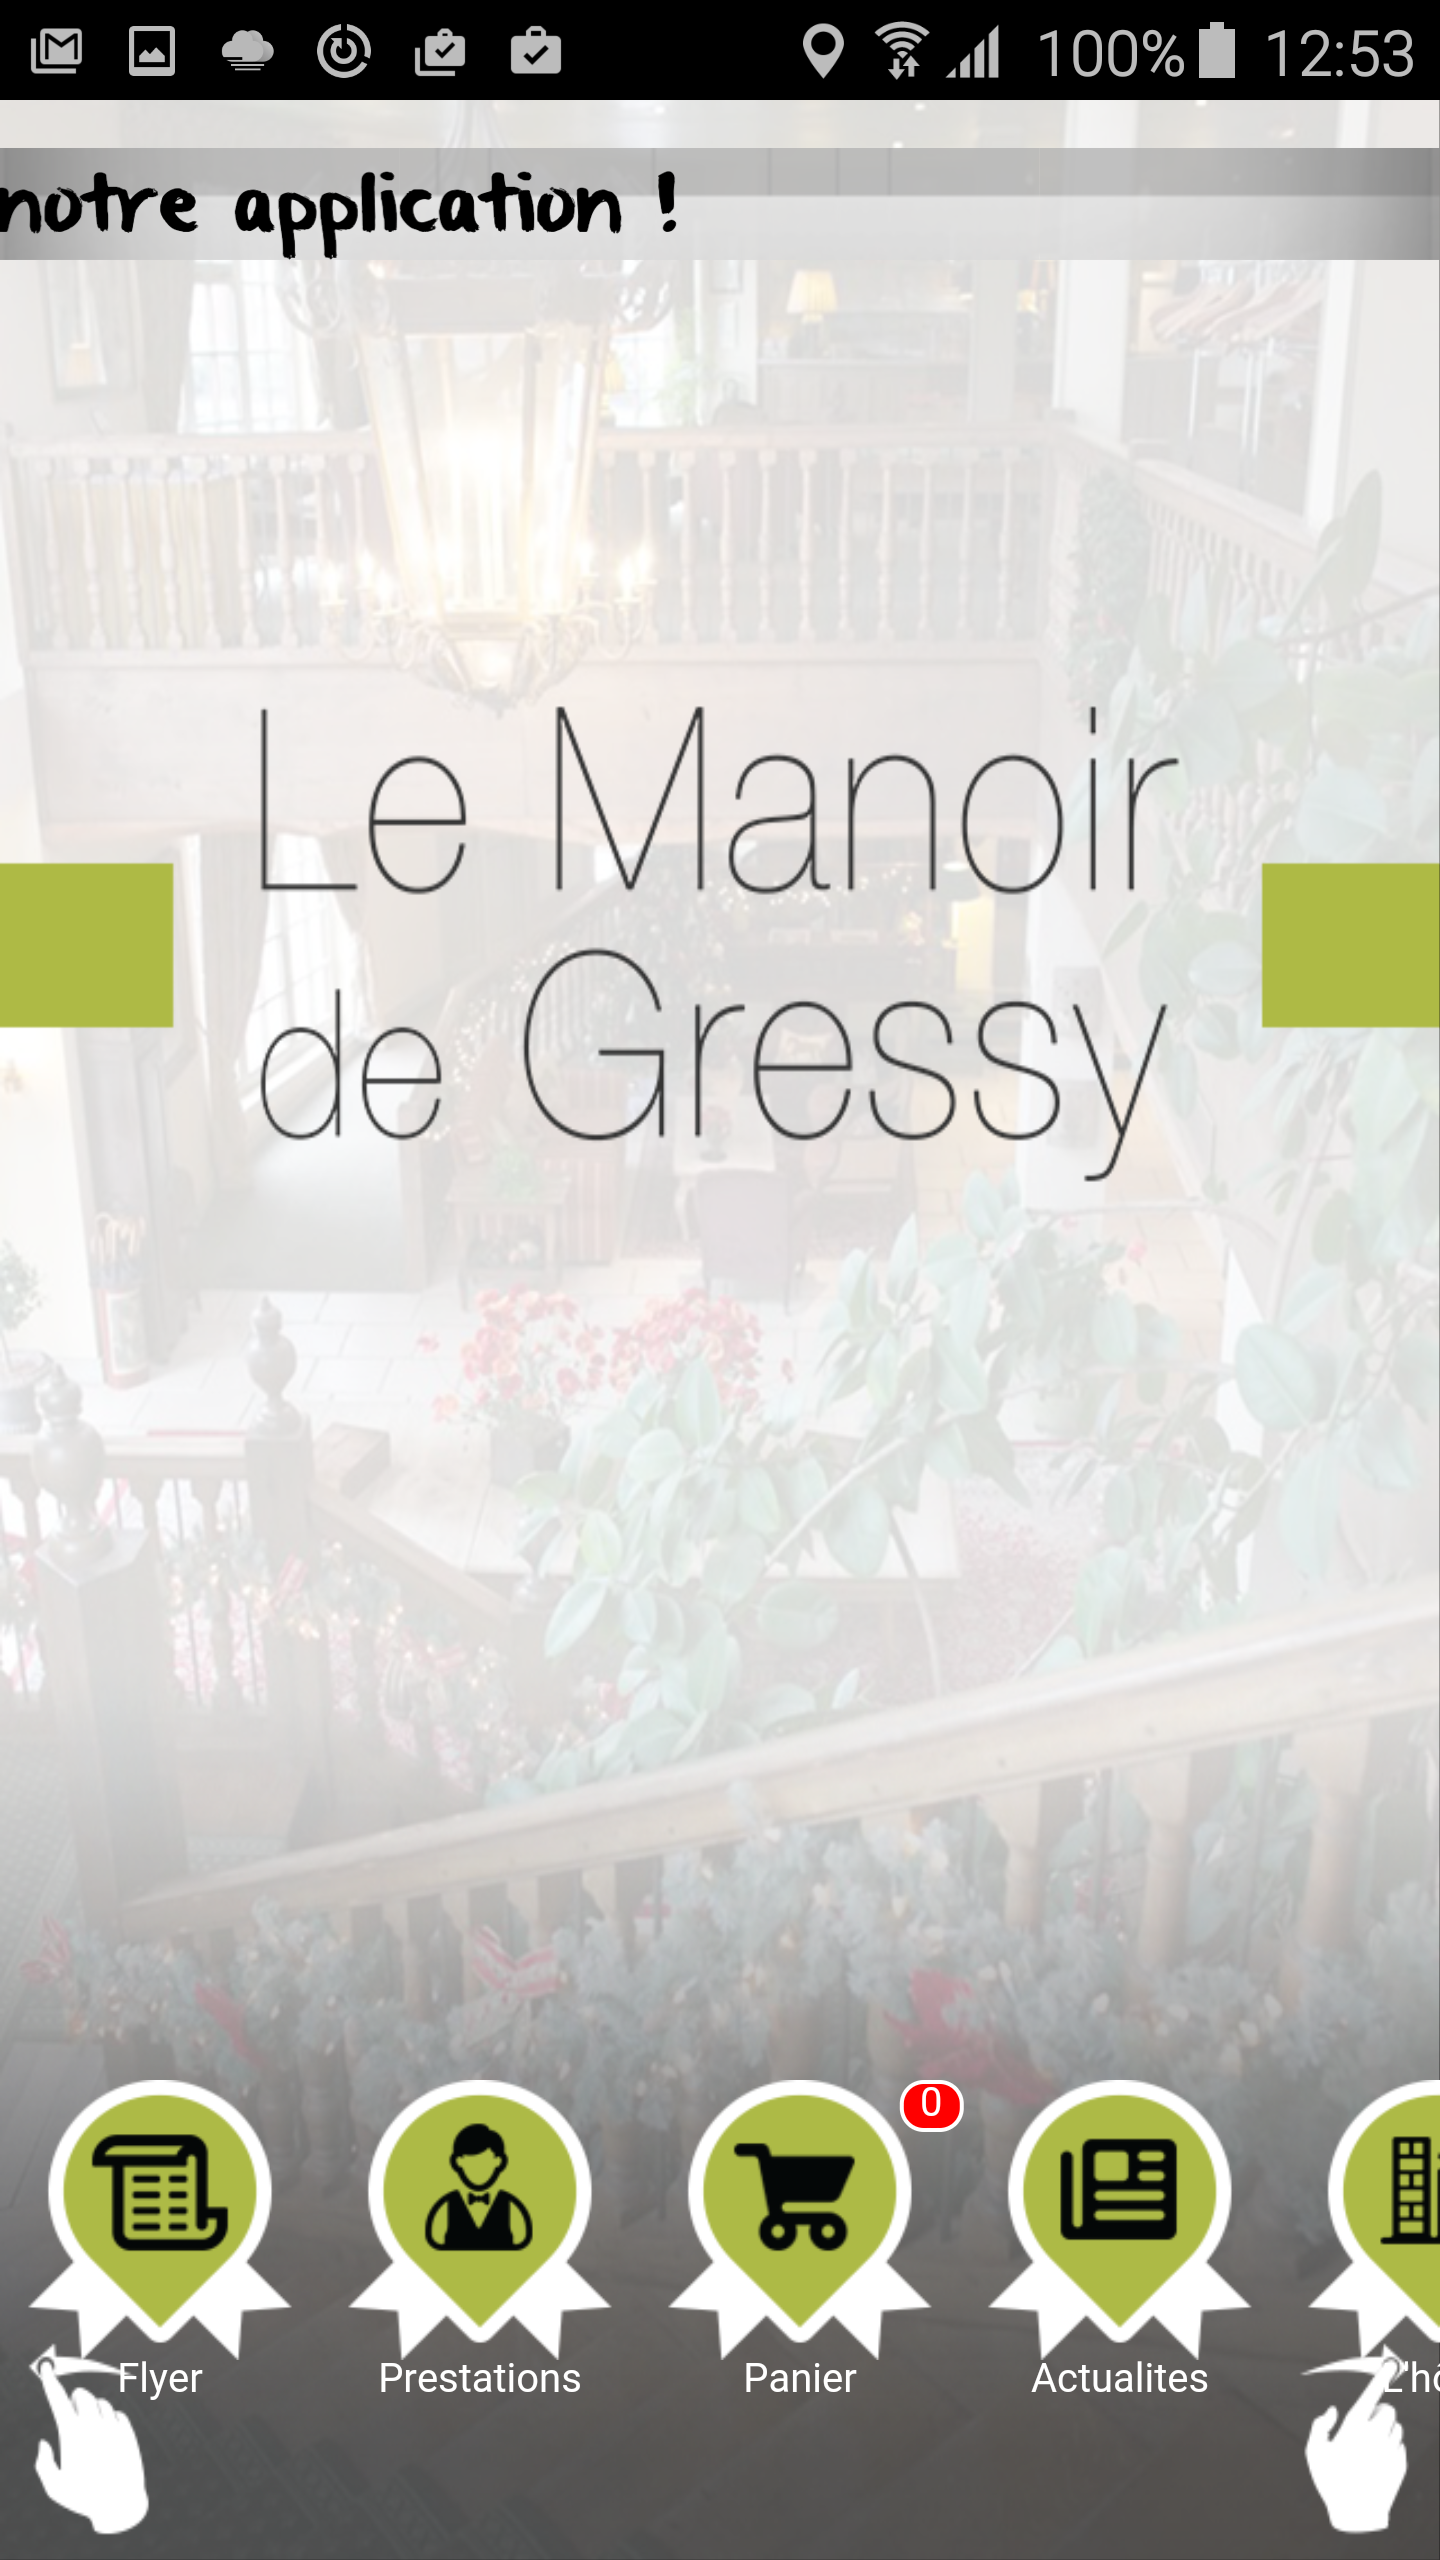 Android application Le Manoir de Gressy screenshort